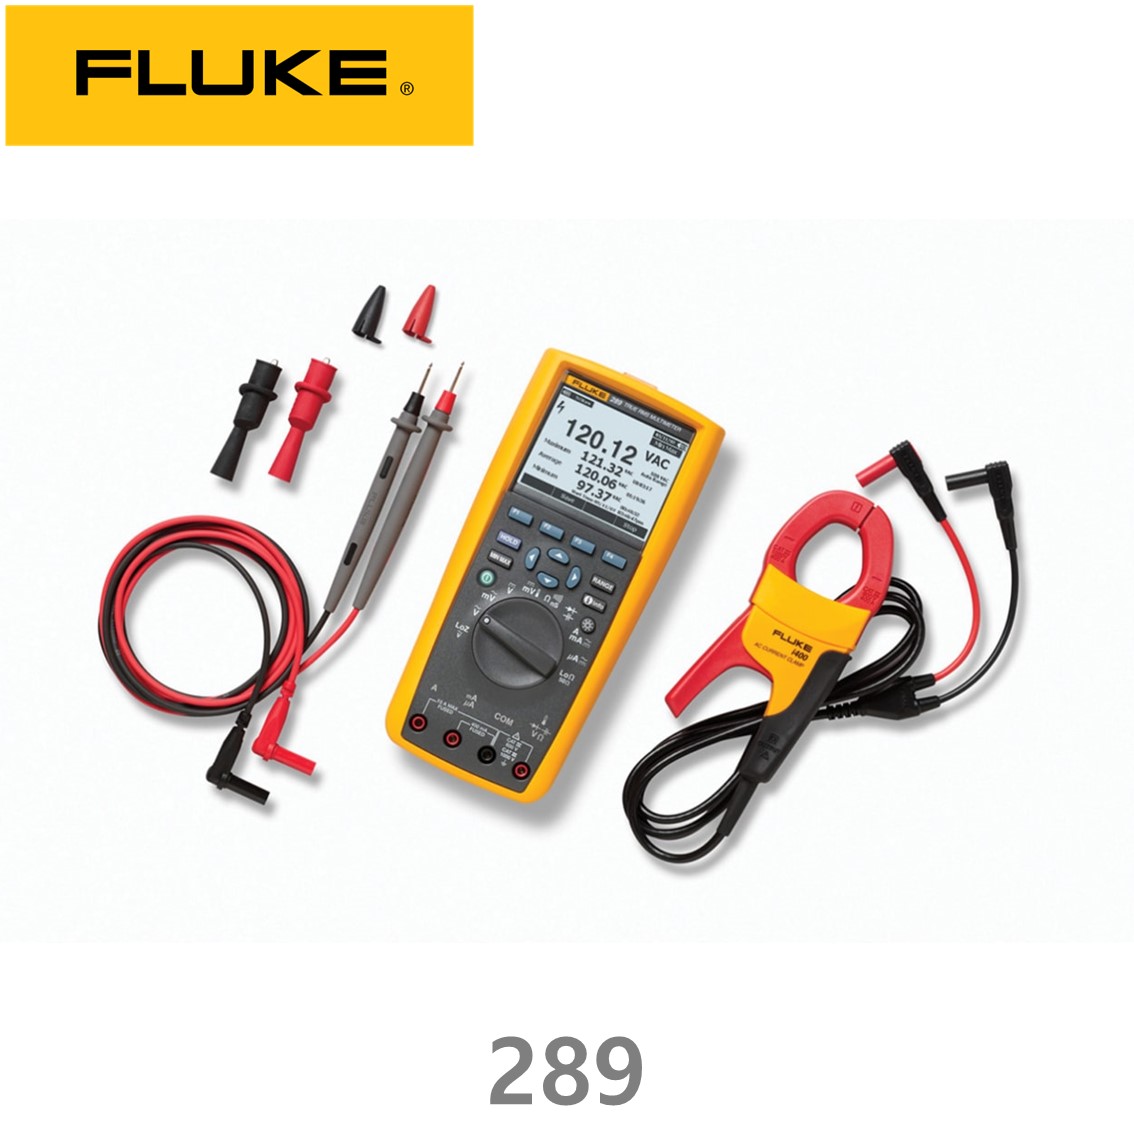 [ FLUKE 289 ] 정품 플루크 디지털멀티미터 289 (True-RMS/ LOGGING)